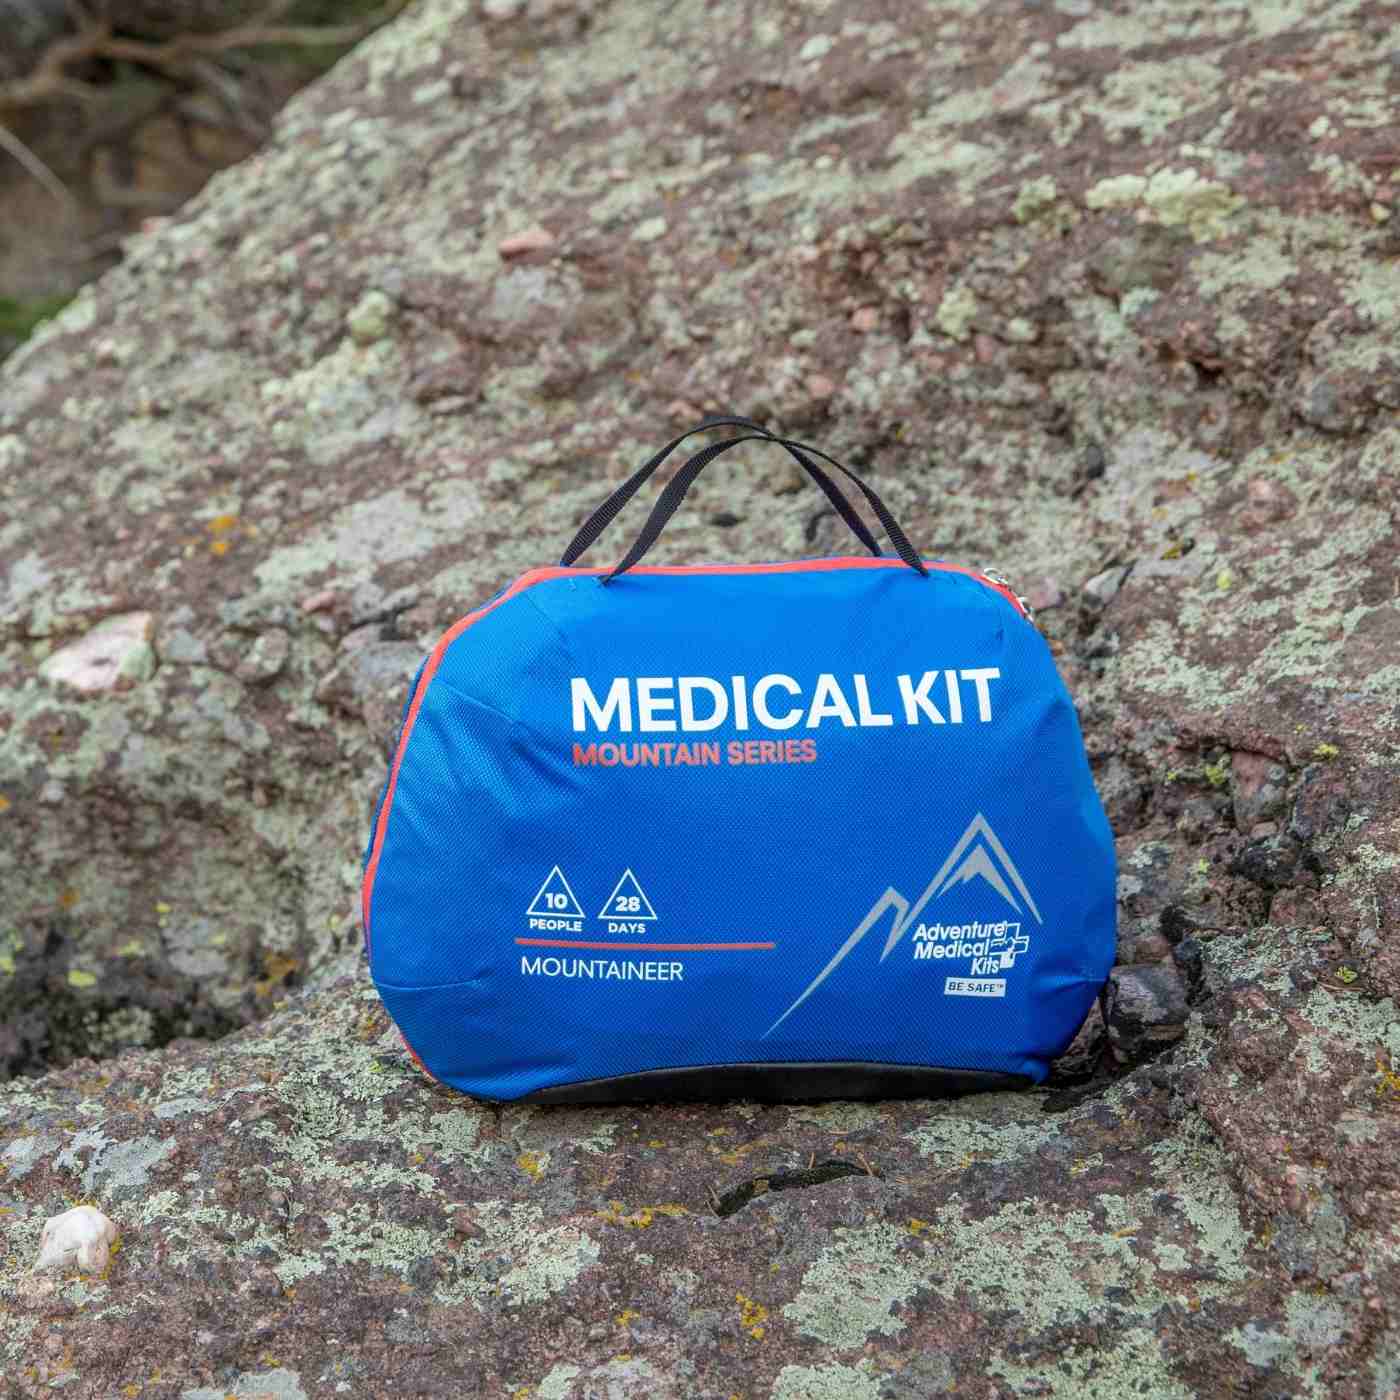 Mountain Series Medical Kit - Mountaineer kit on rock